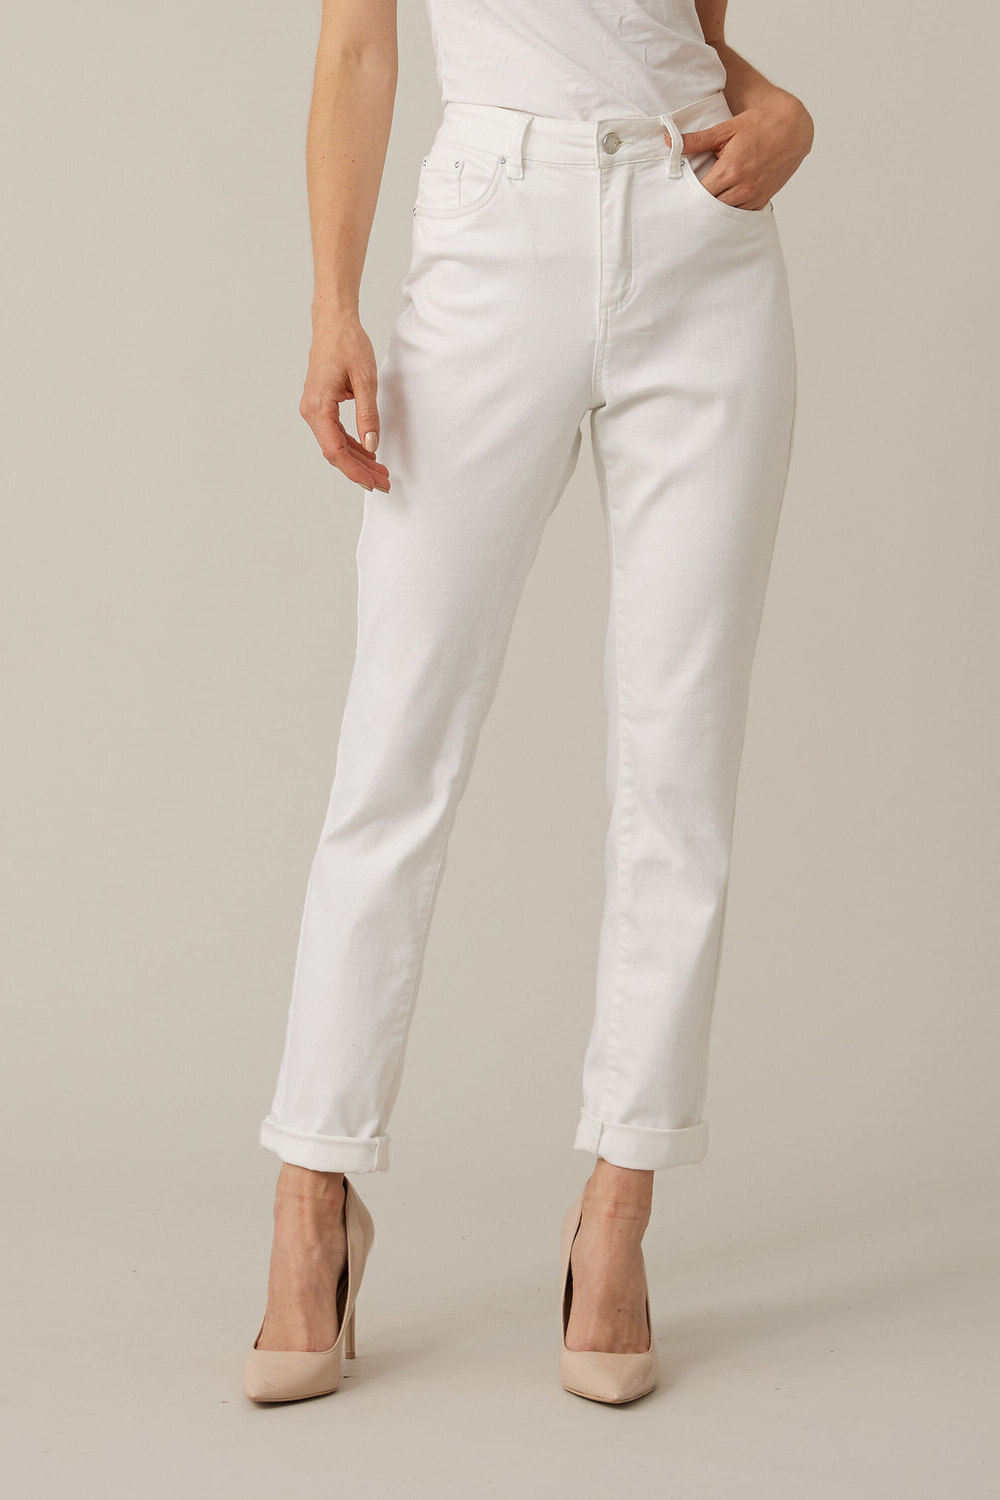 Joseph Ribkoff Cropped Jeans Style 221943. White